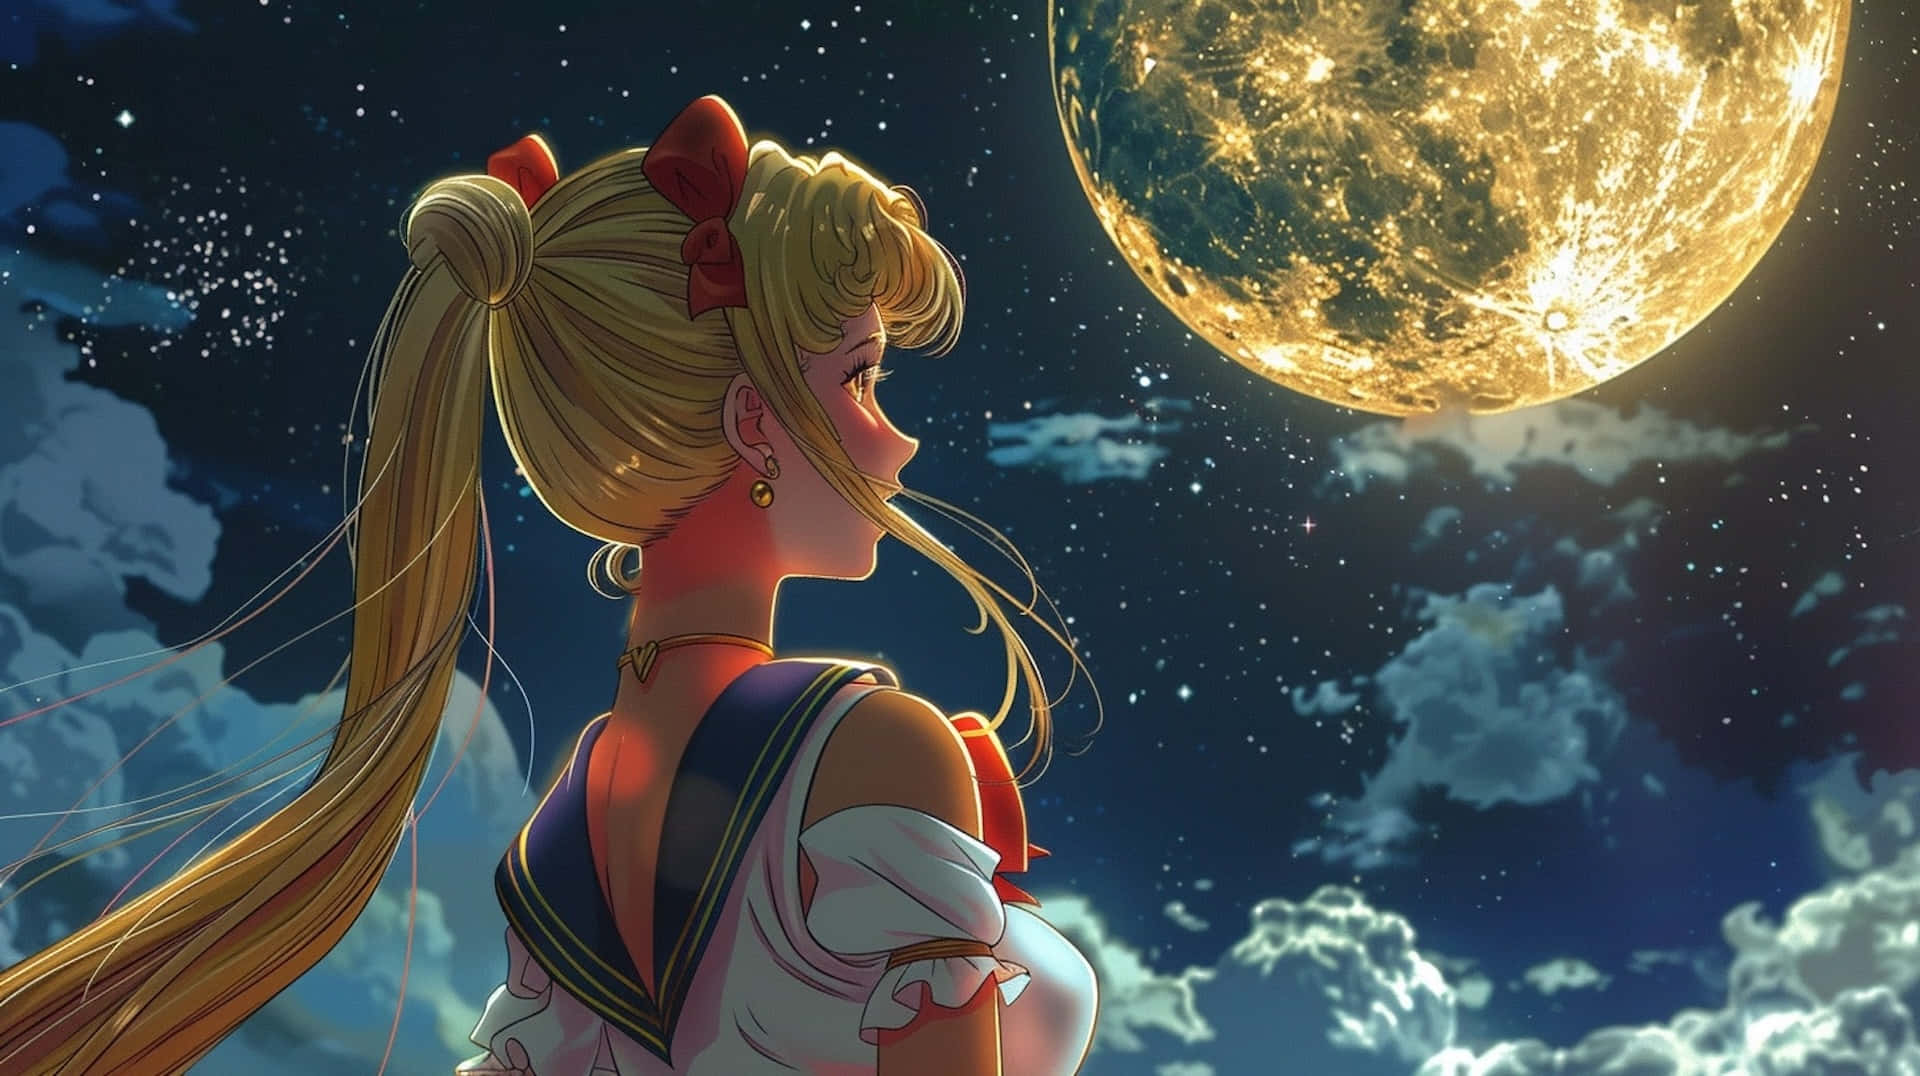 Sailor Moon Gazingatthe Moon Wallpaper